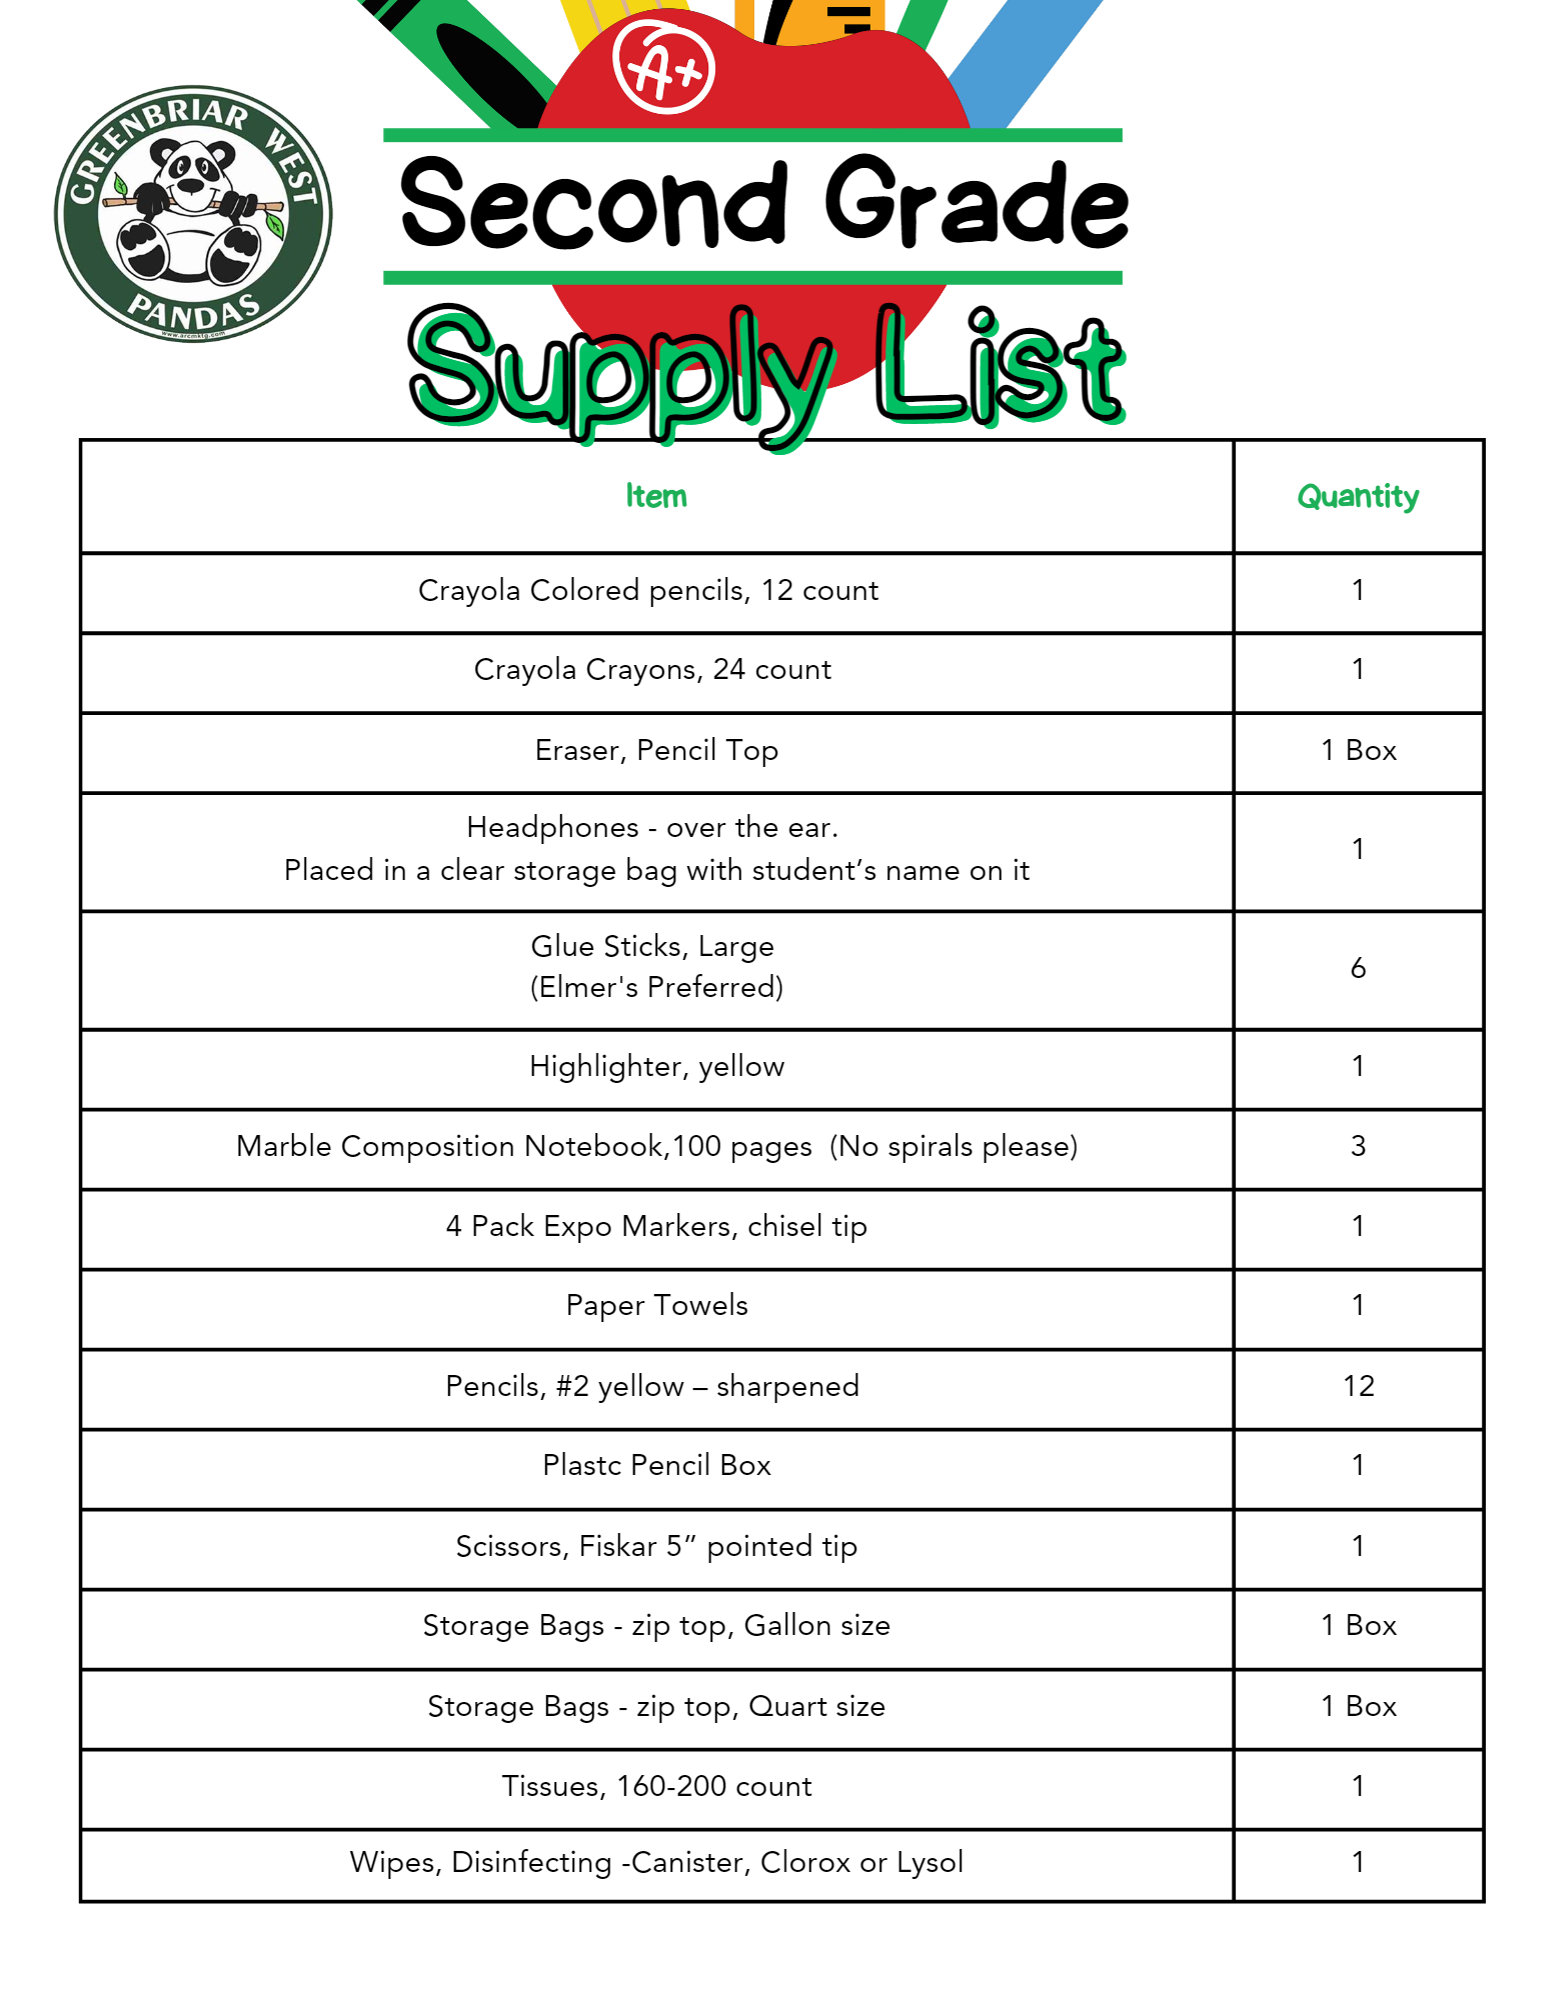 Second Grade Supply List 